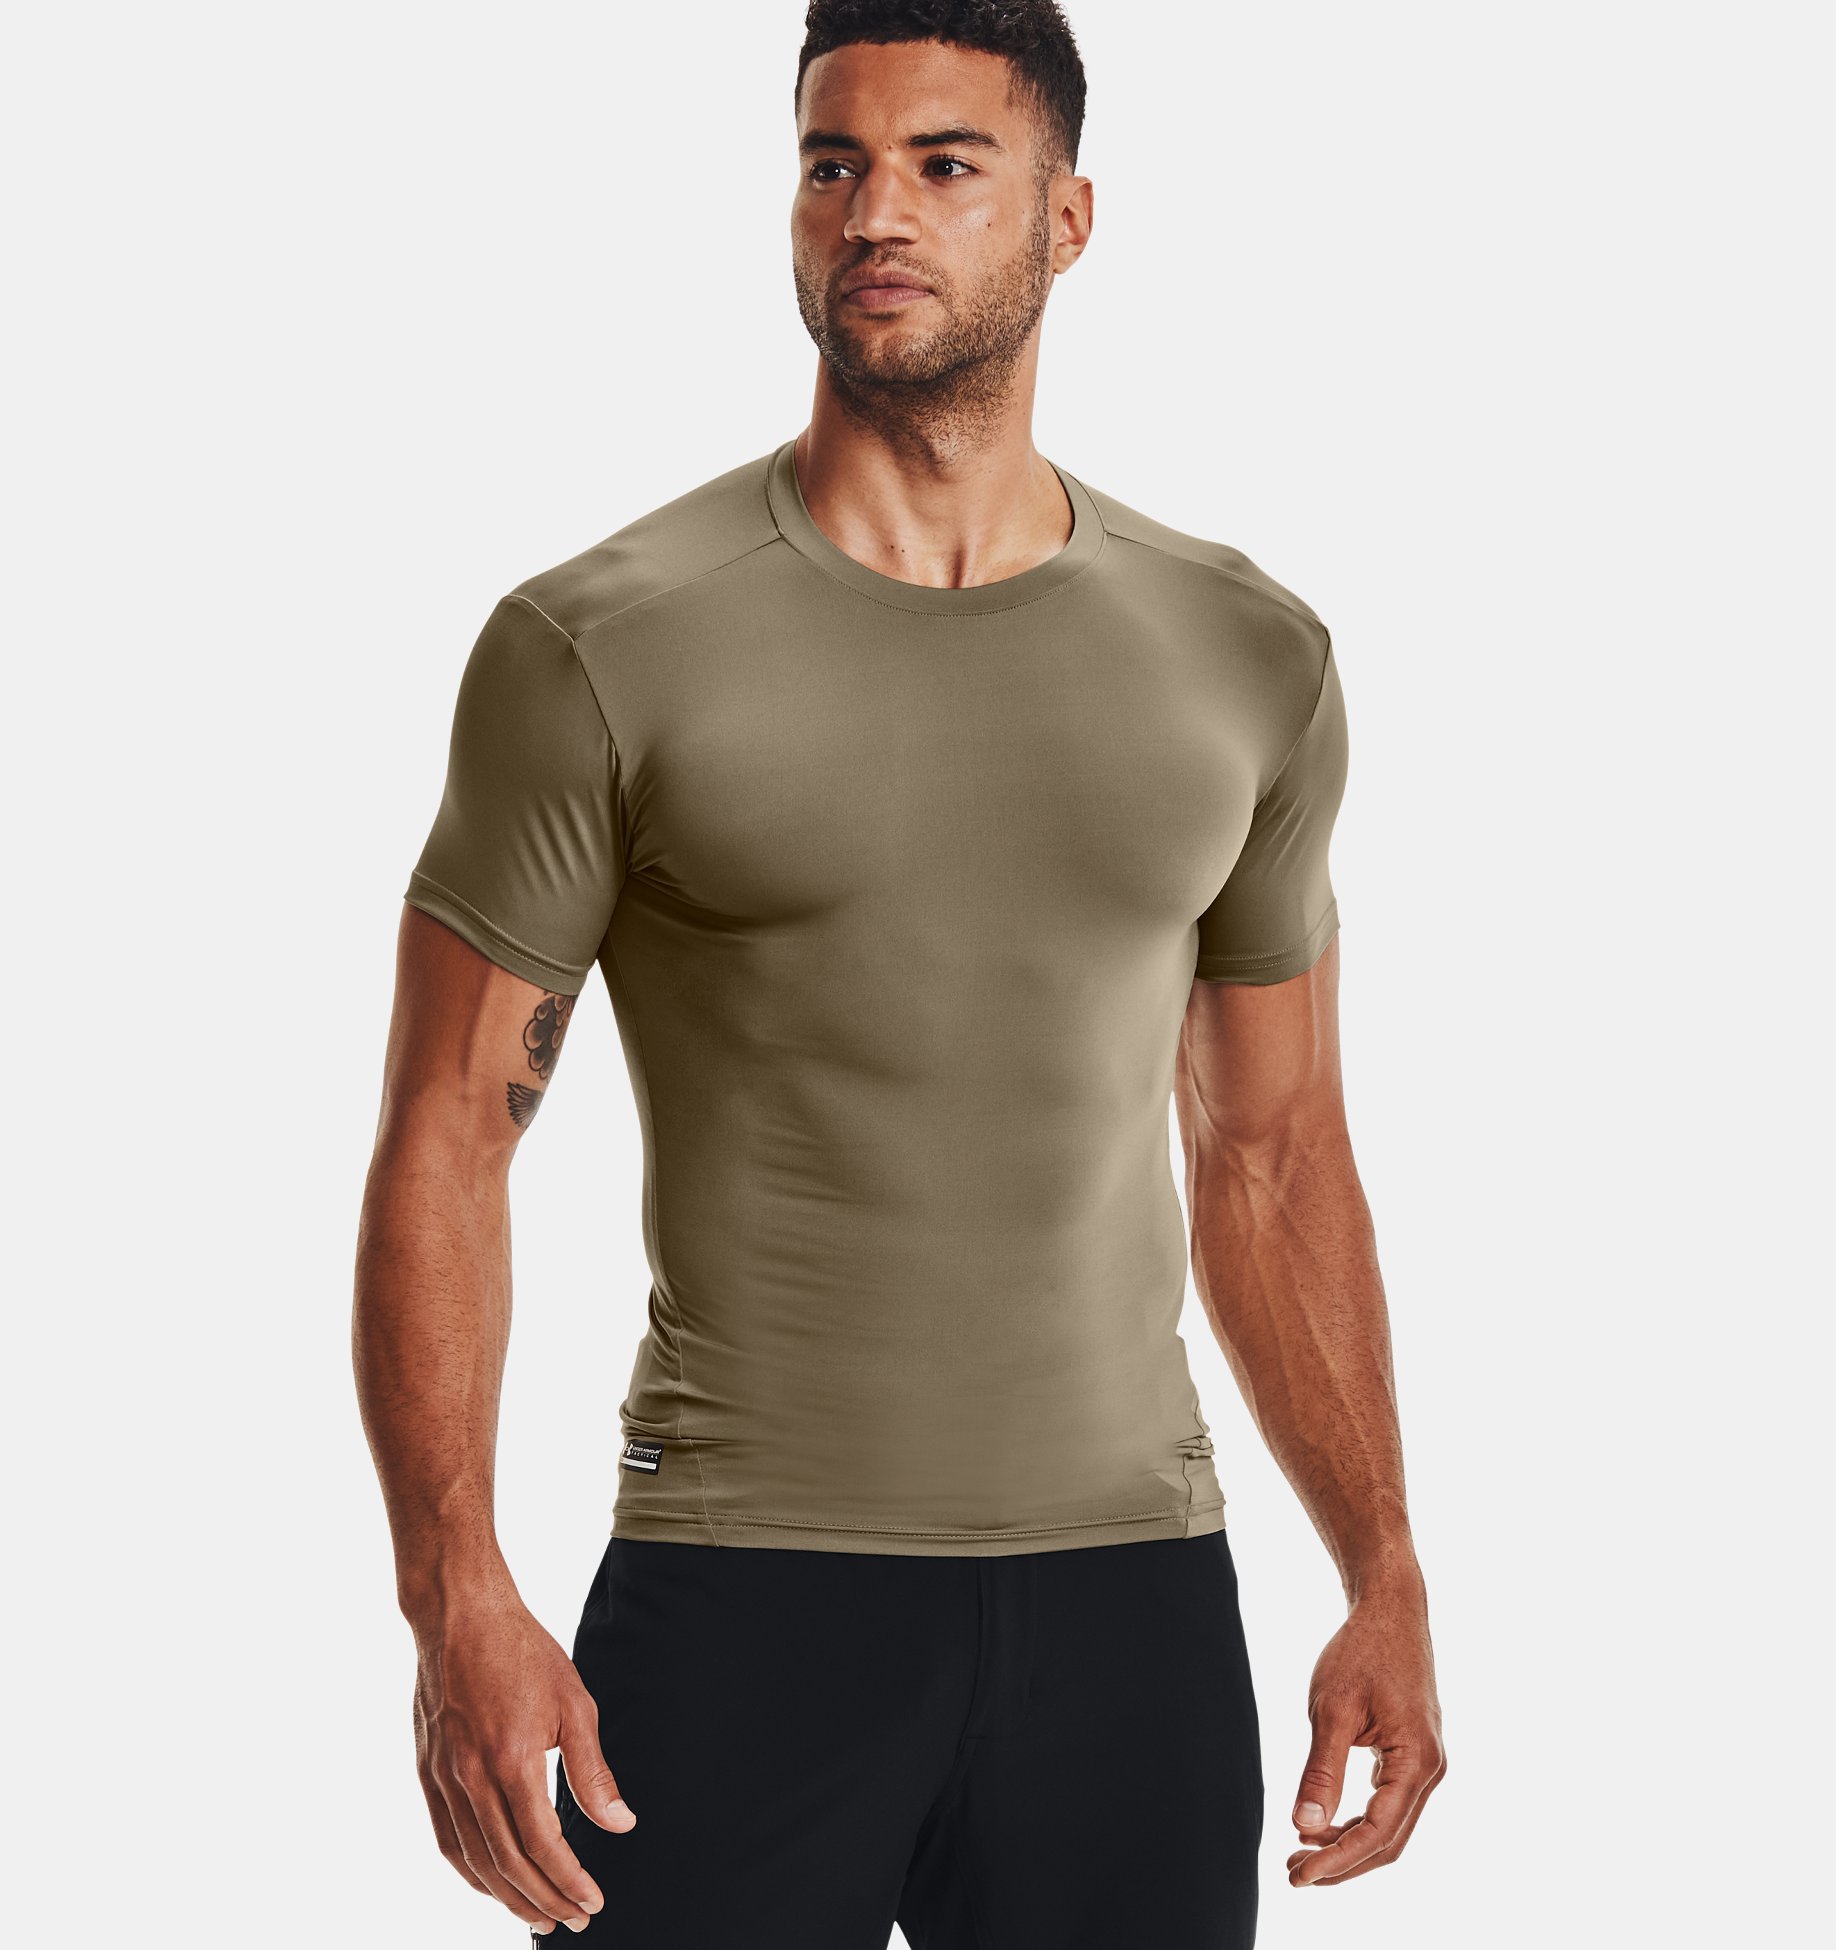 Under Armour 1216007 Men's Tee UA HeatGear Compression Short Sleeve T-Shirt 